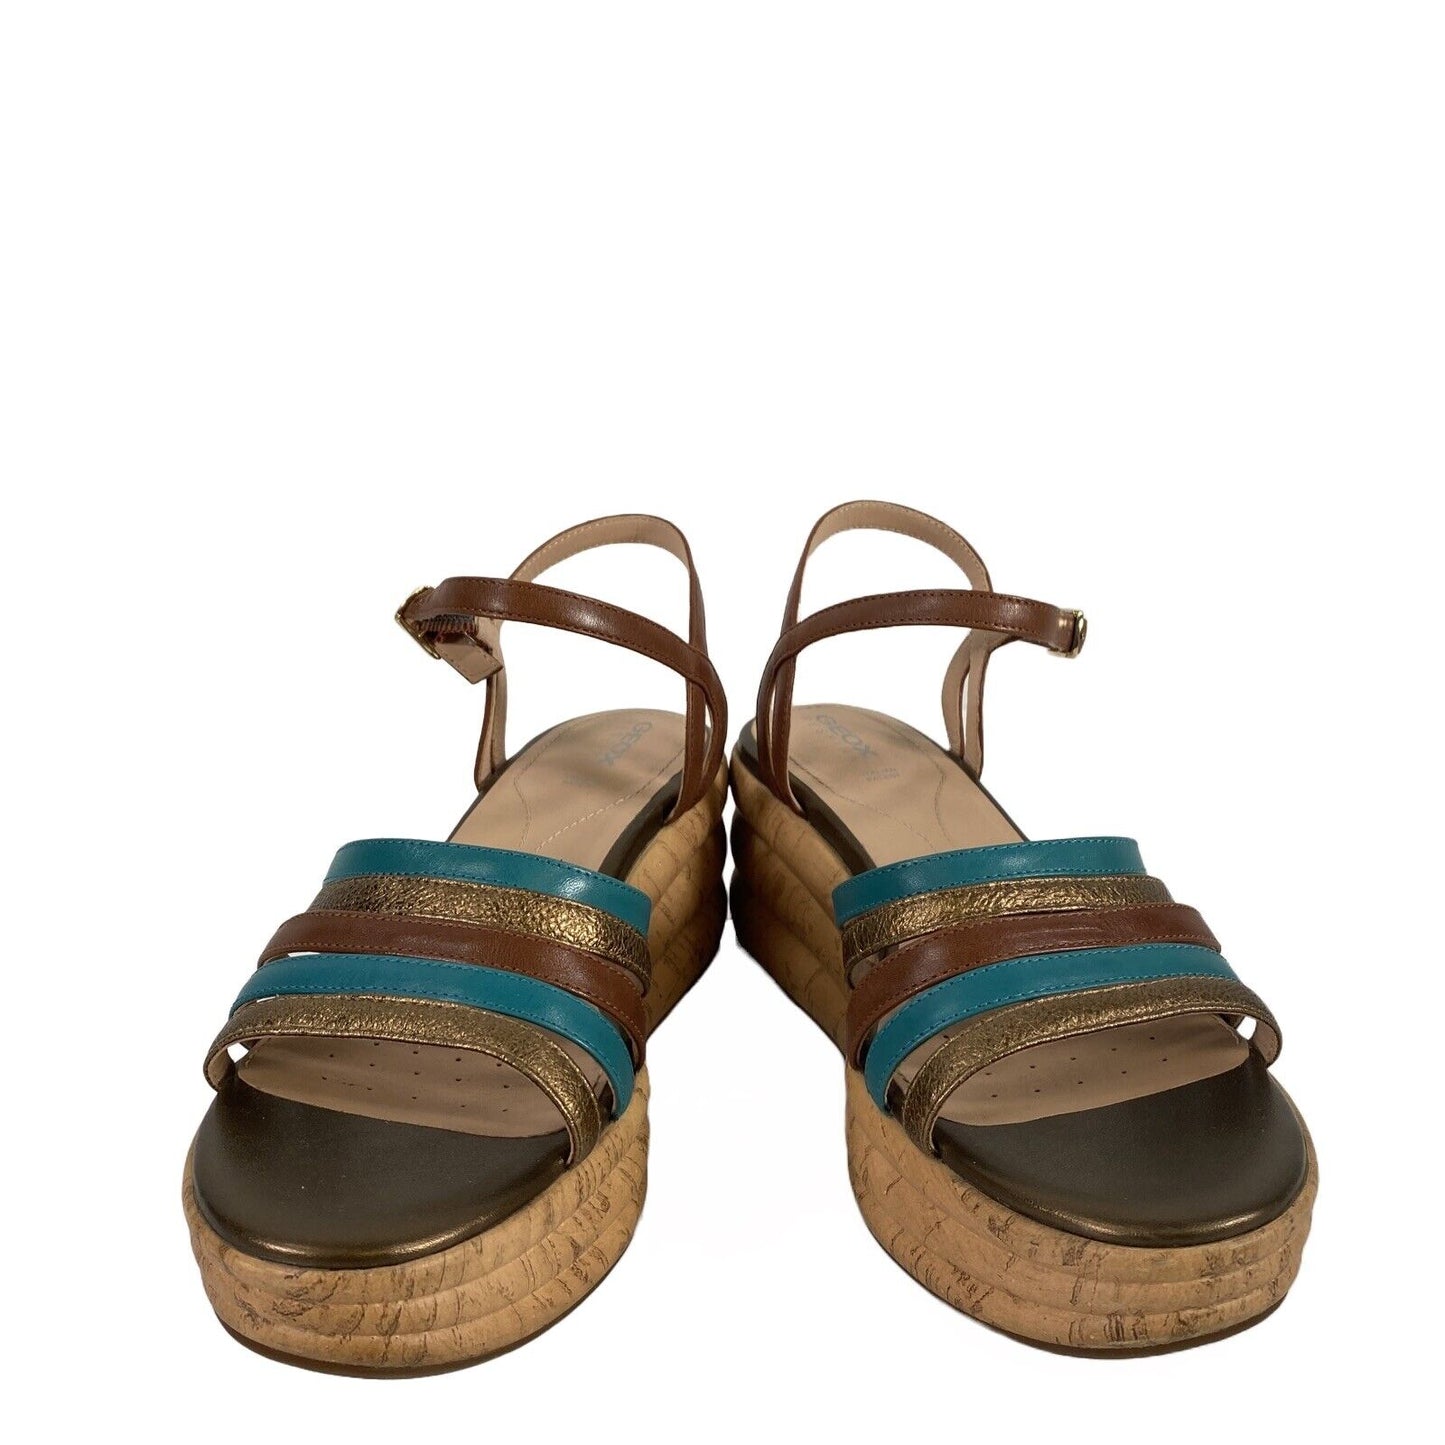 Geox Respira Women's Brown/Blue Primulao Platform Sandals - 39 (US 9)